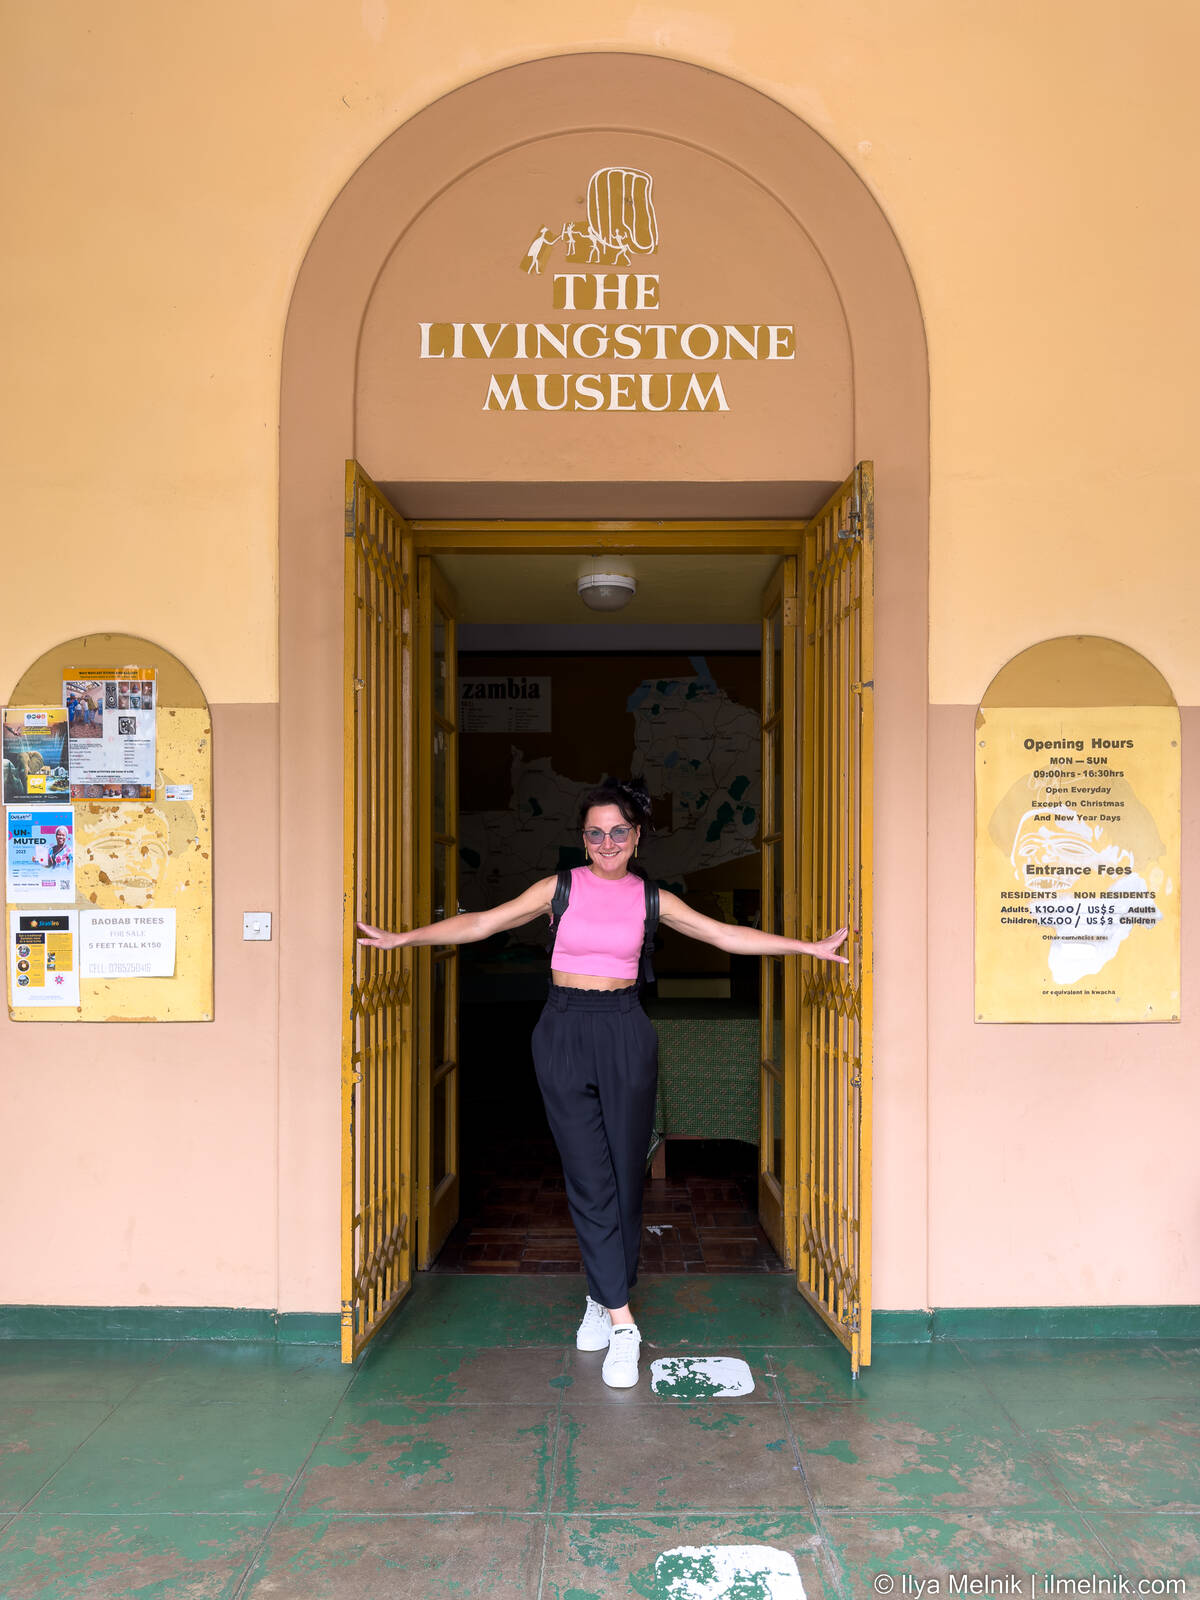 Image of Livingstone Museum by Ilya Melnik